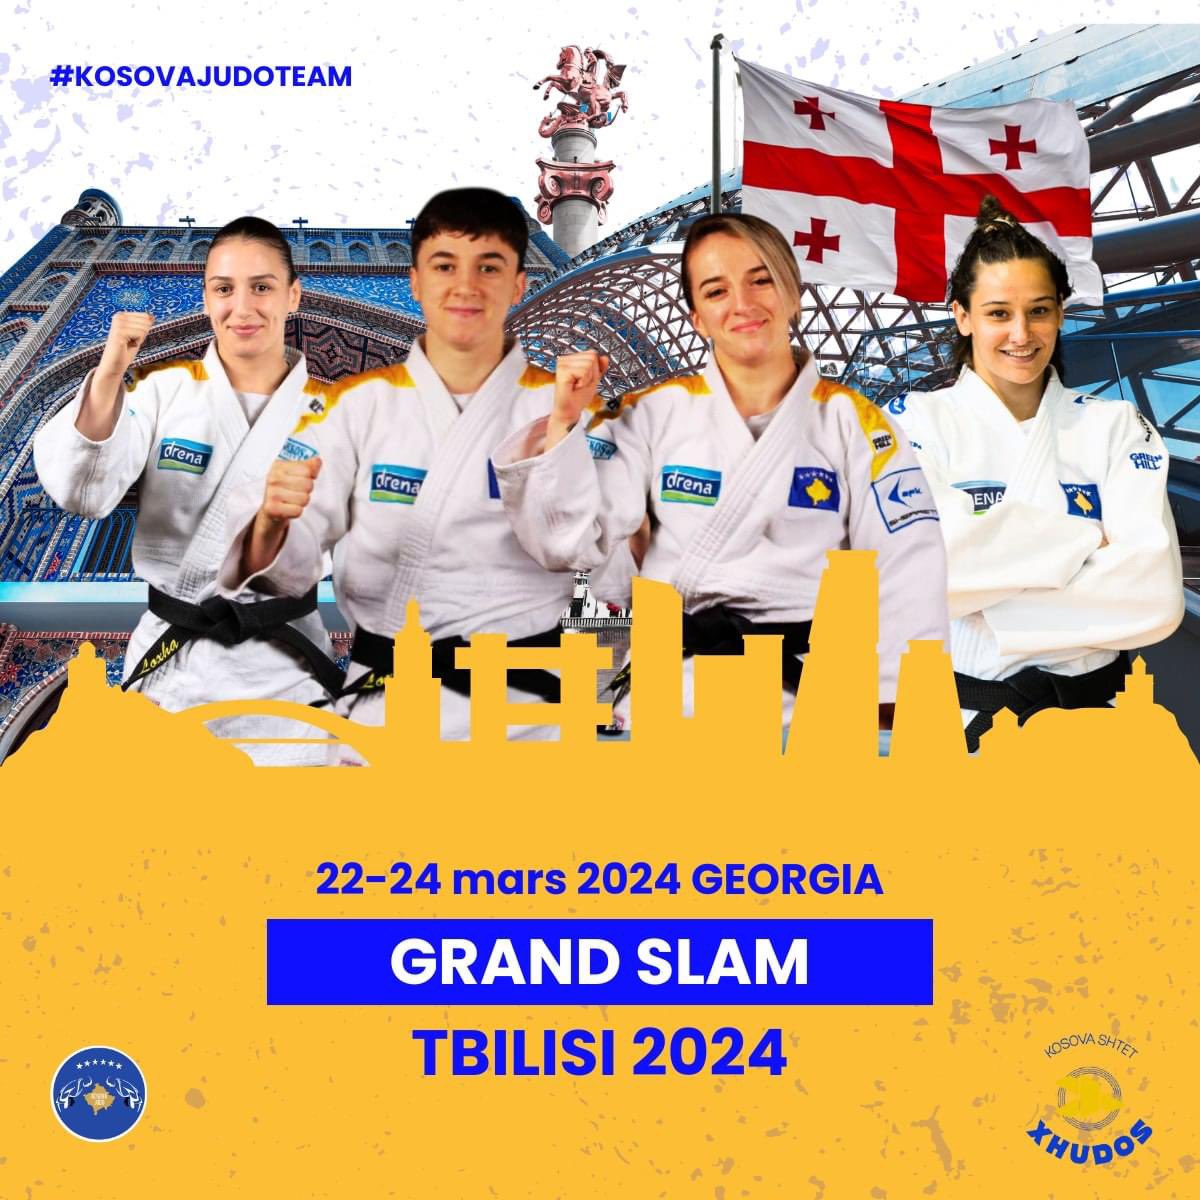 Grand Slam Tbilisi 2024 📣 Our team will compete with Distria, Laura, Flaka and Loriana! 💪🏻 Watch it live: judotv.com 🔴 #KosovaJudoTeam🇽🇰🥋